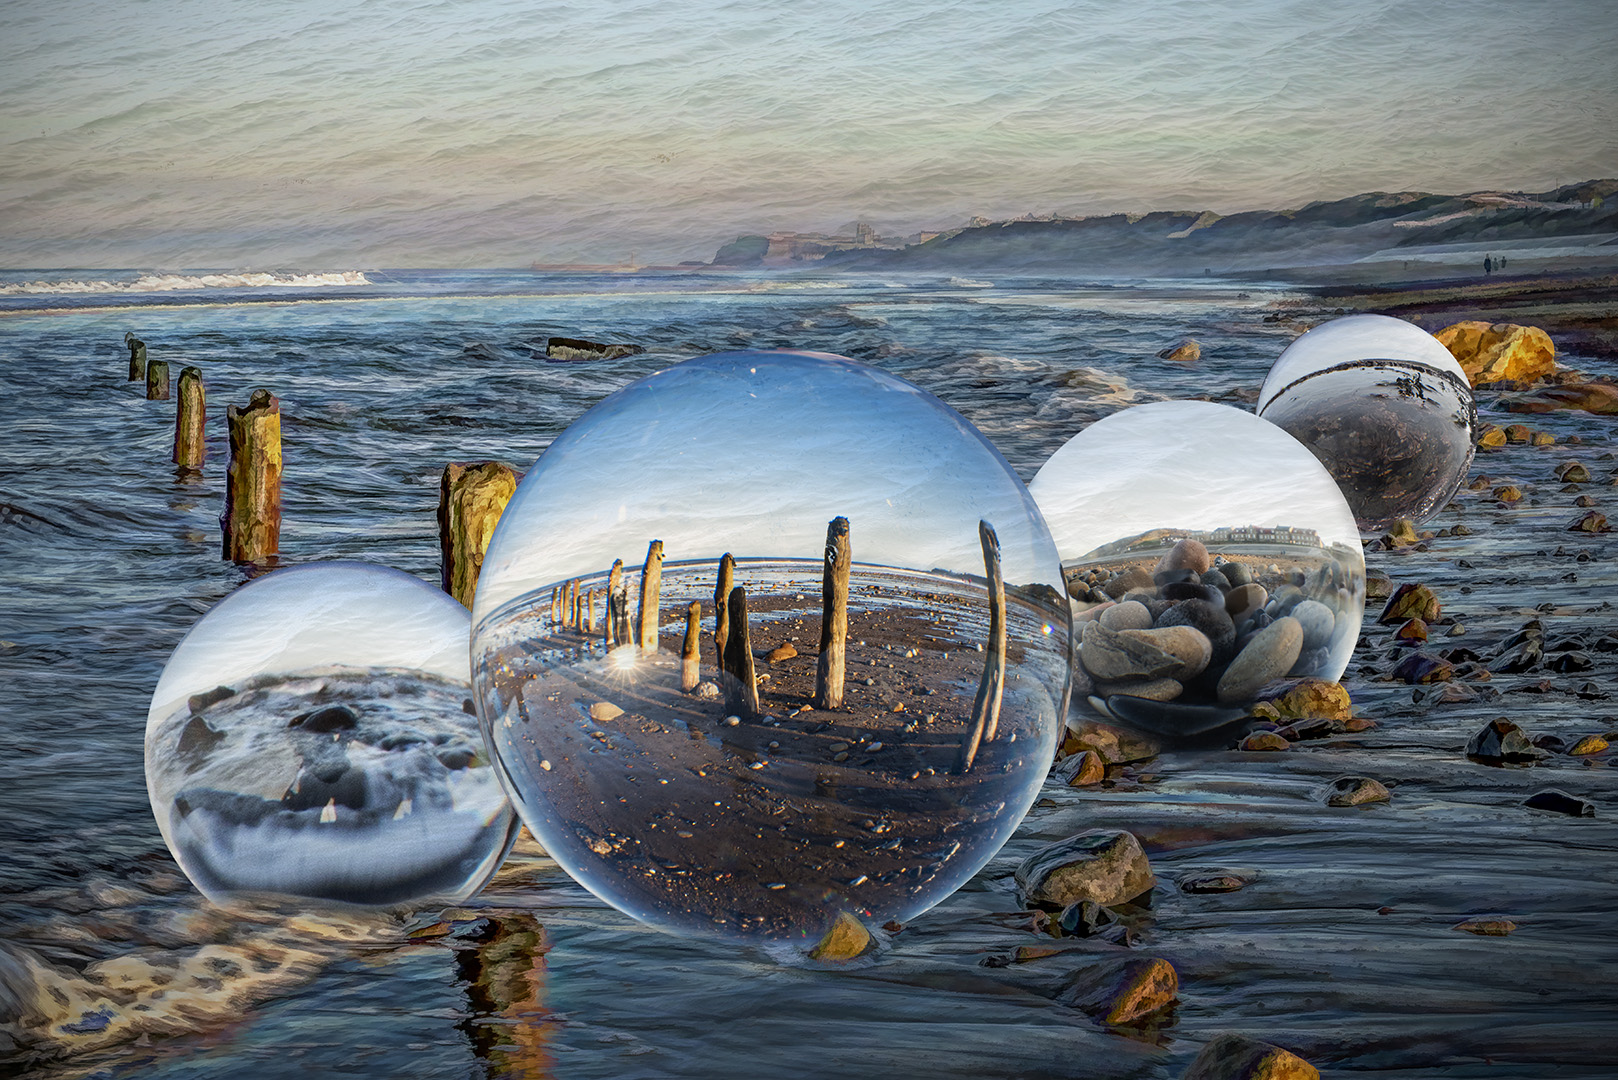 Beach Balls by Steve Estill, EPSA